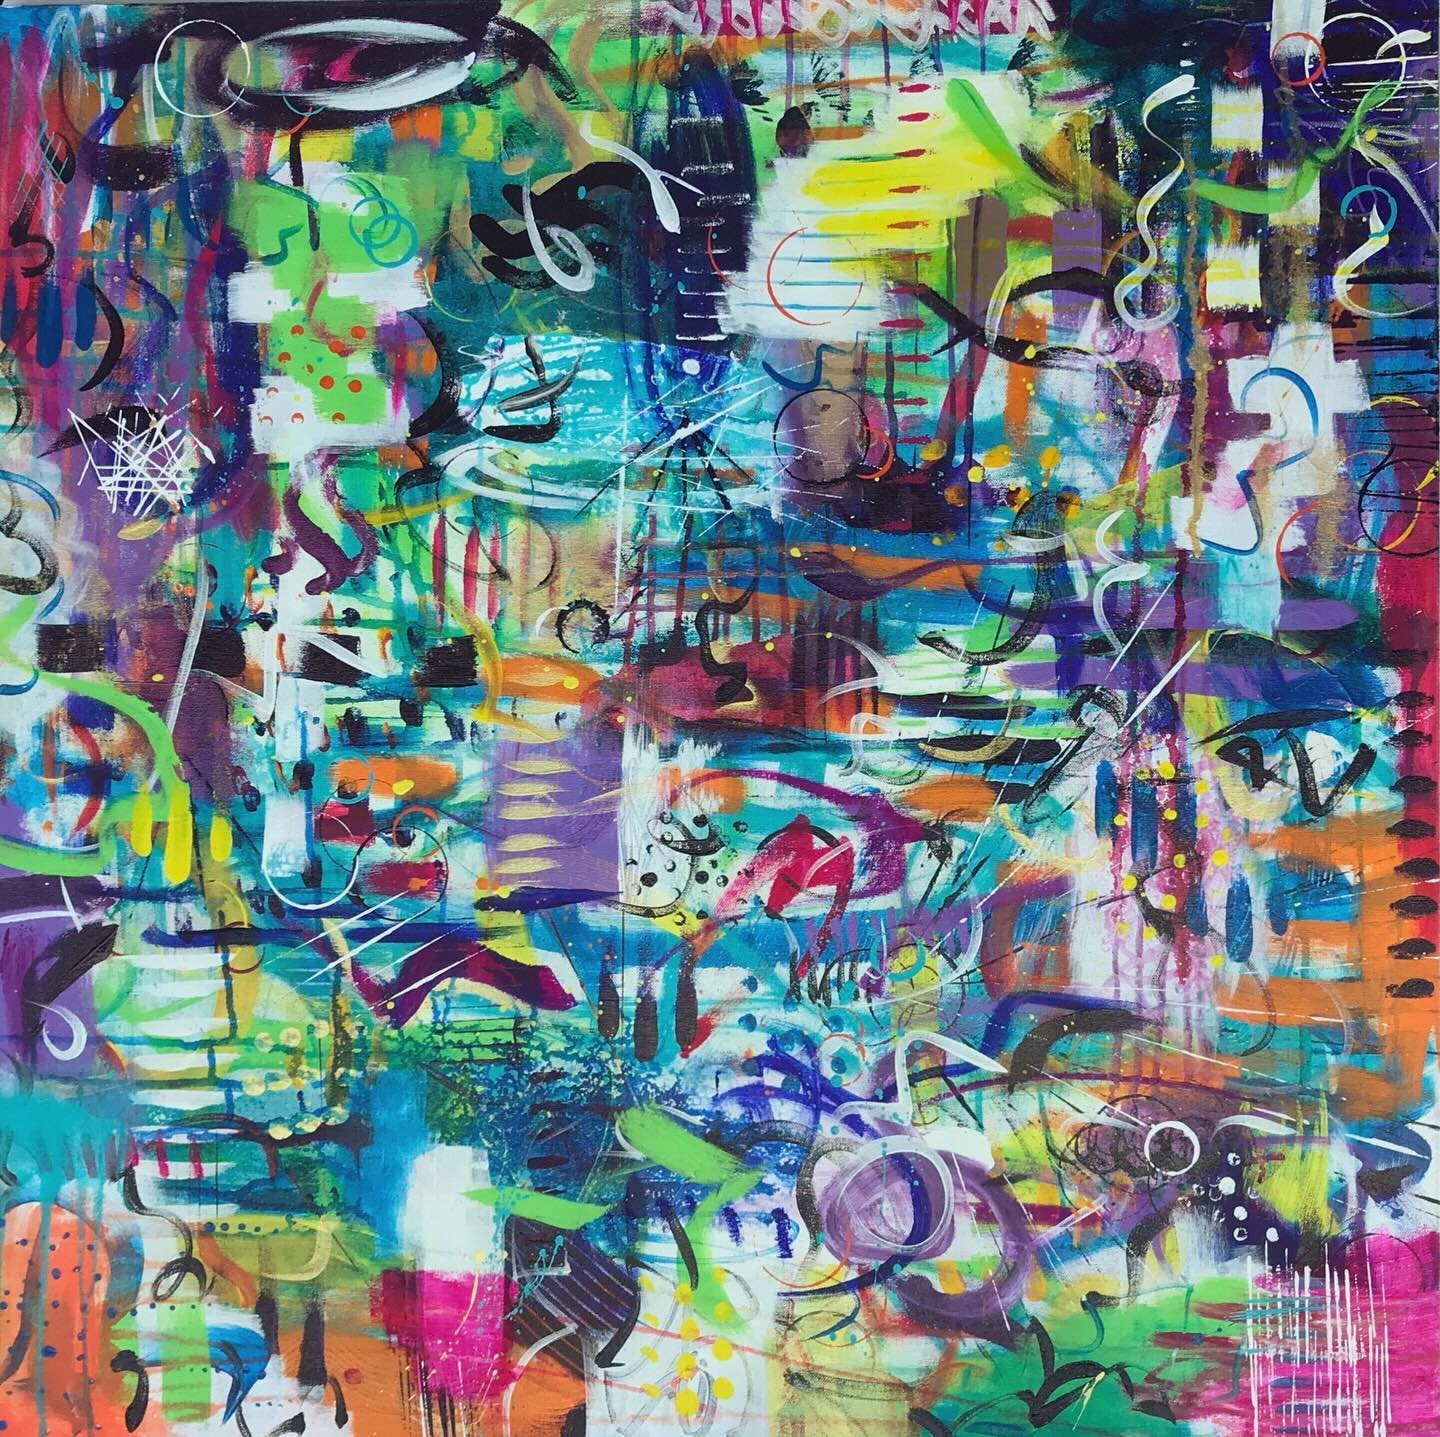 Galactic (2019) 30&rdquo; x 30&rdquo; original abstract painting.  Available! 
.
.
.
.
.
.
 #brilliantaquastudios #shopart #artforthehome #abstractartwork #processartist #contemporaryart #markmaking #markmakingart #contemporaryartist #processdrivenar